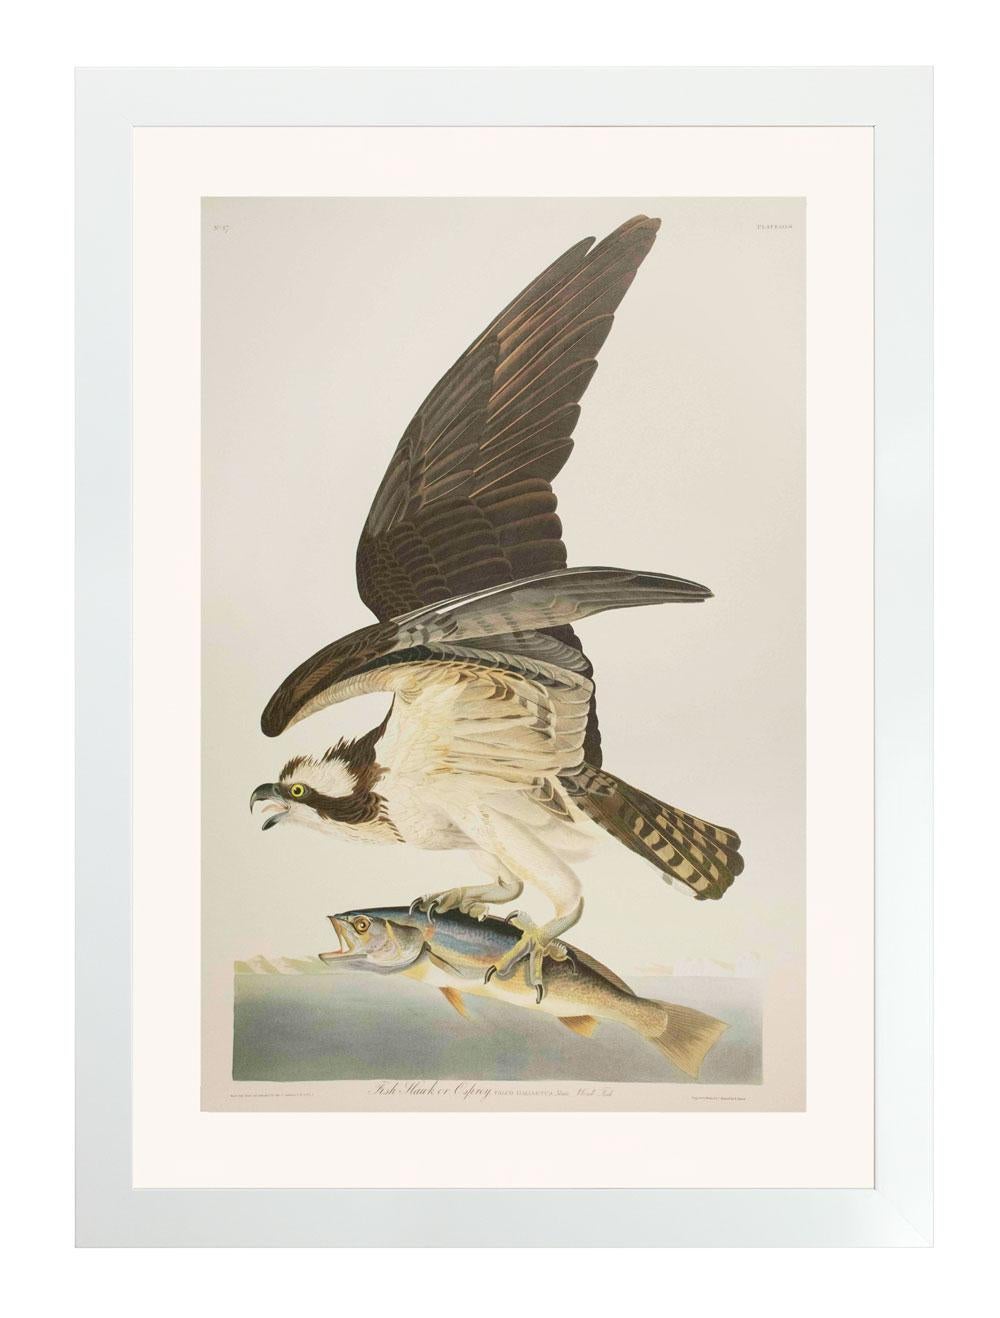 After John James Audubon Animal Print - Fish Hawk, or Osprey, Edition Pl. 81